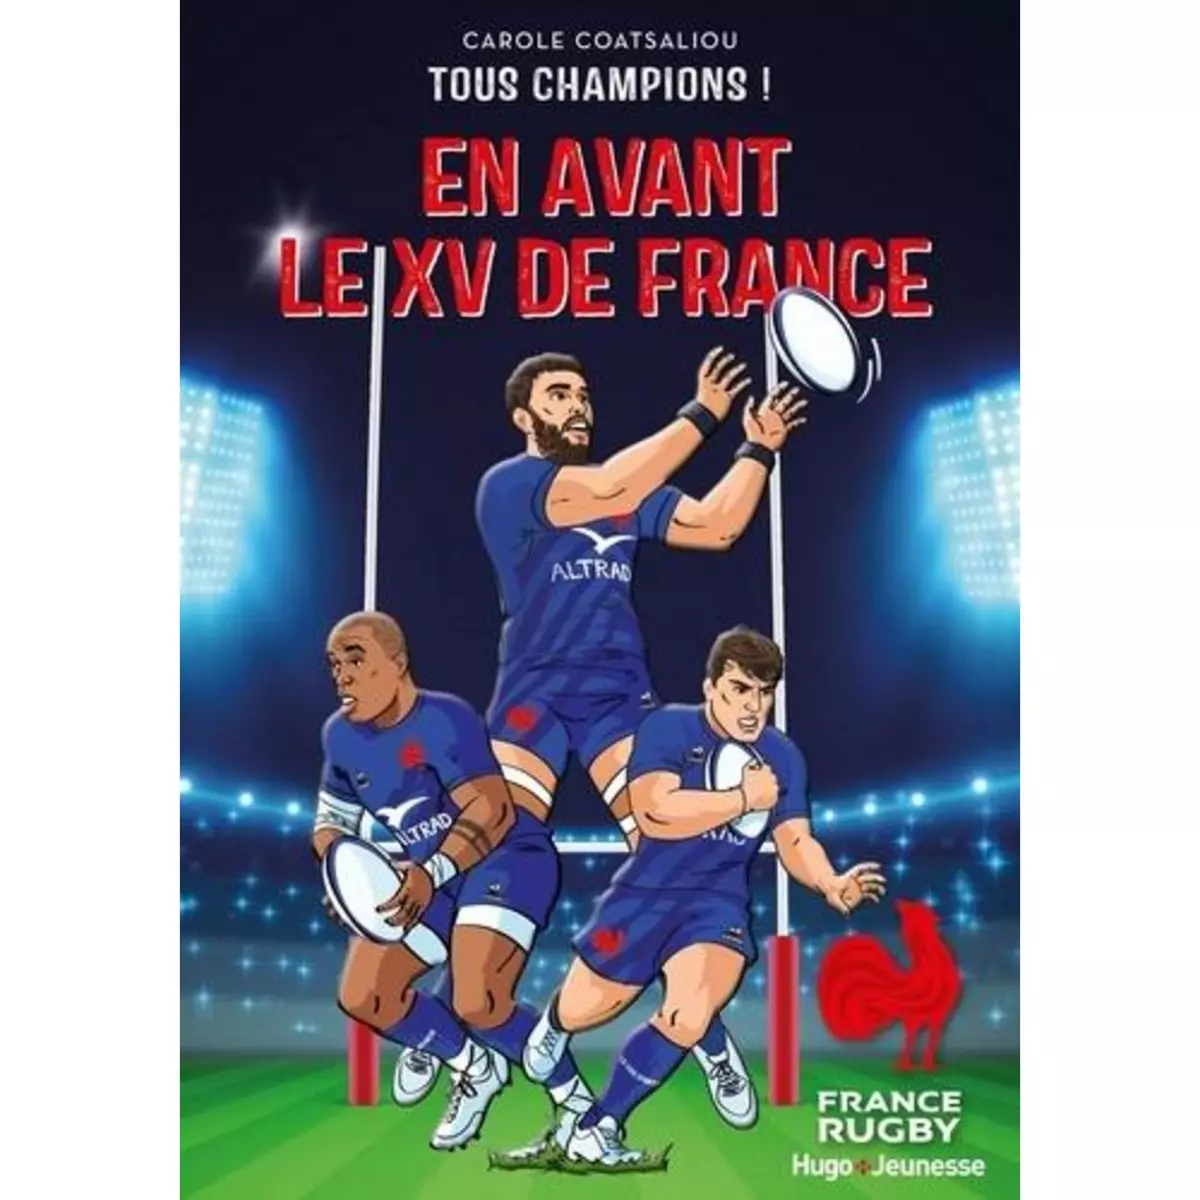  TOUS CHAMPIONS ! TOME 1 : EN AVANT LE XV DE FRANCE, Coatsaliou Carole